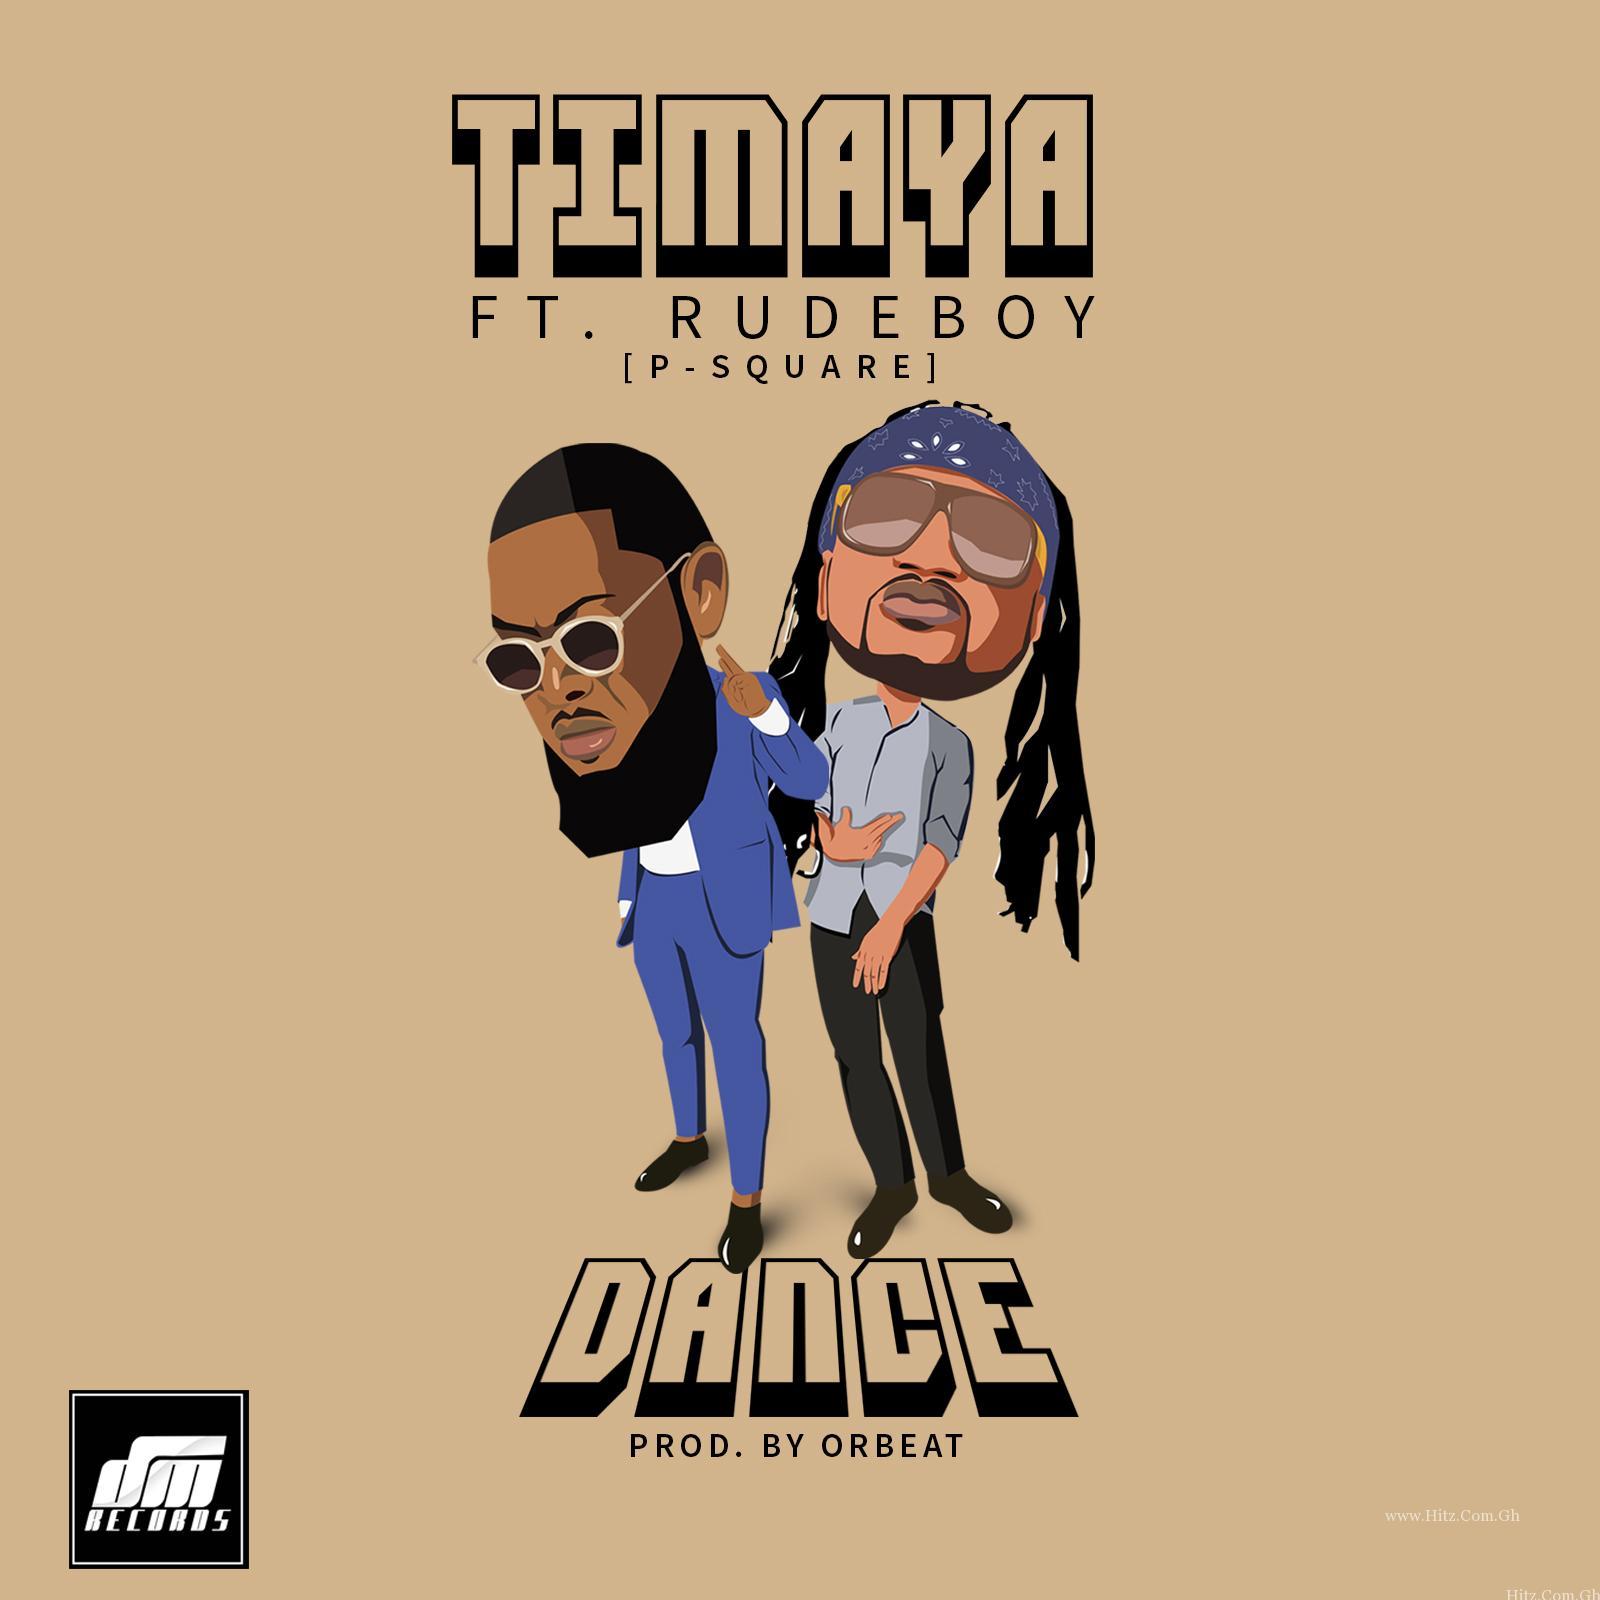 Timaya – Dance ft. Rudeboy (P-Square) (Prod By Orbeat)